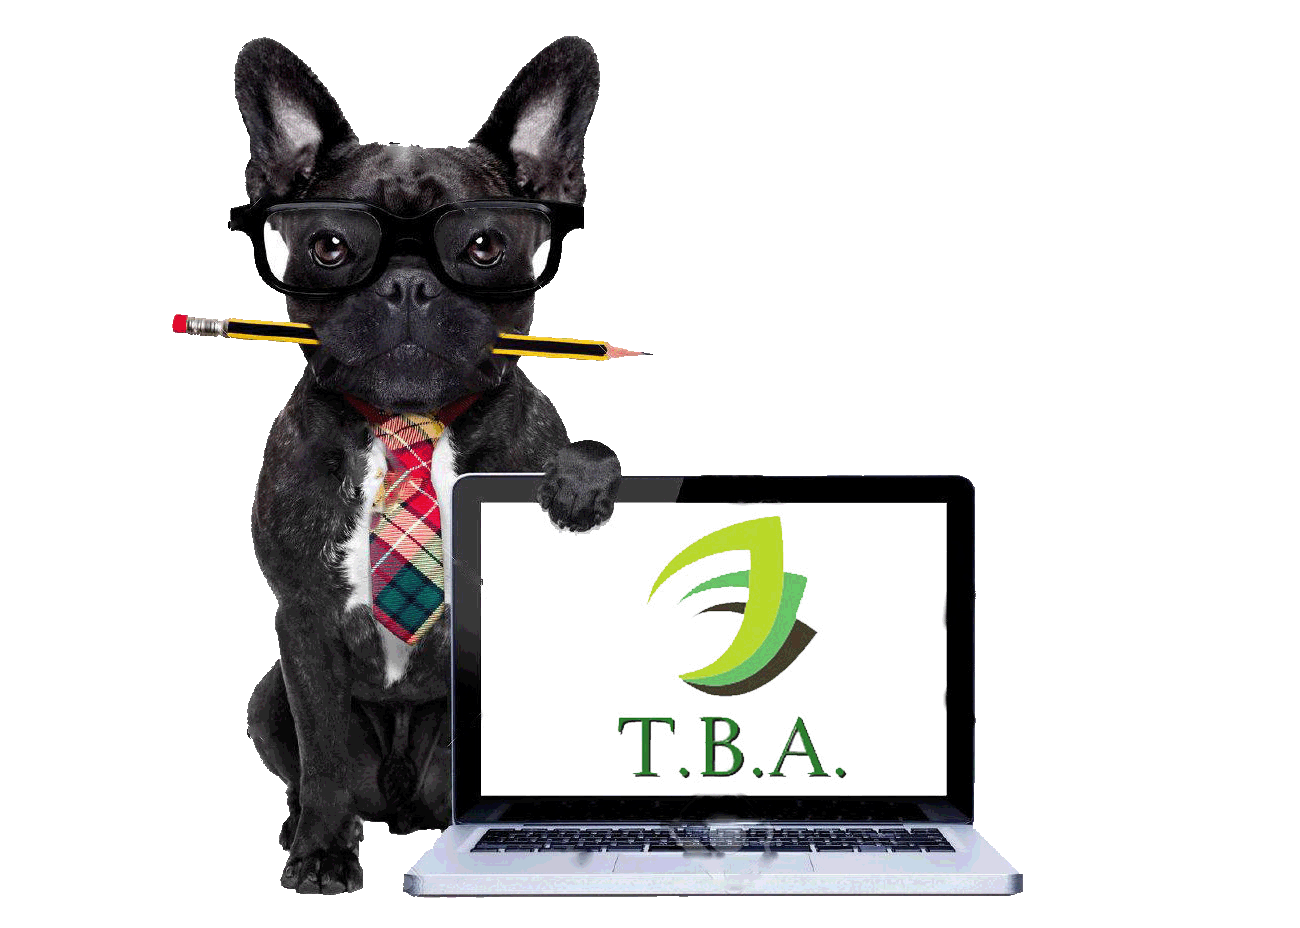 TBA Logo